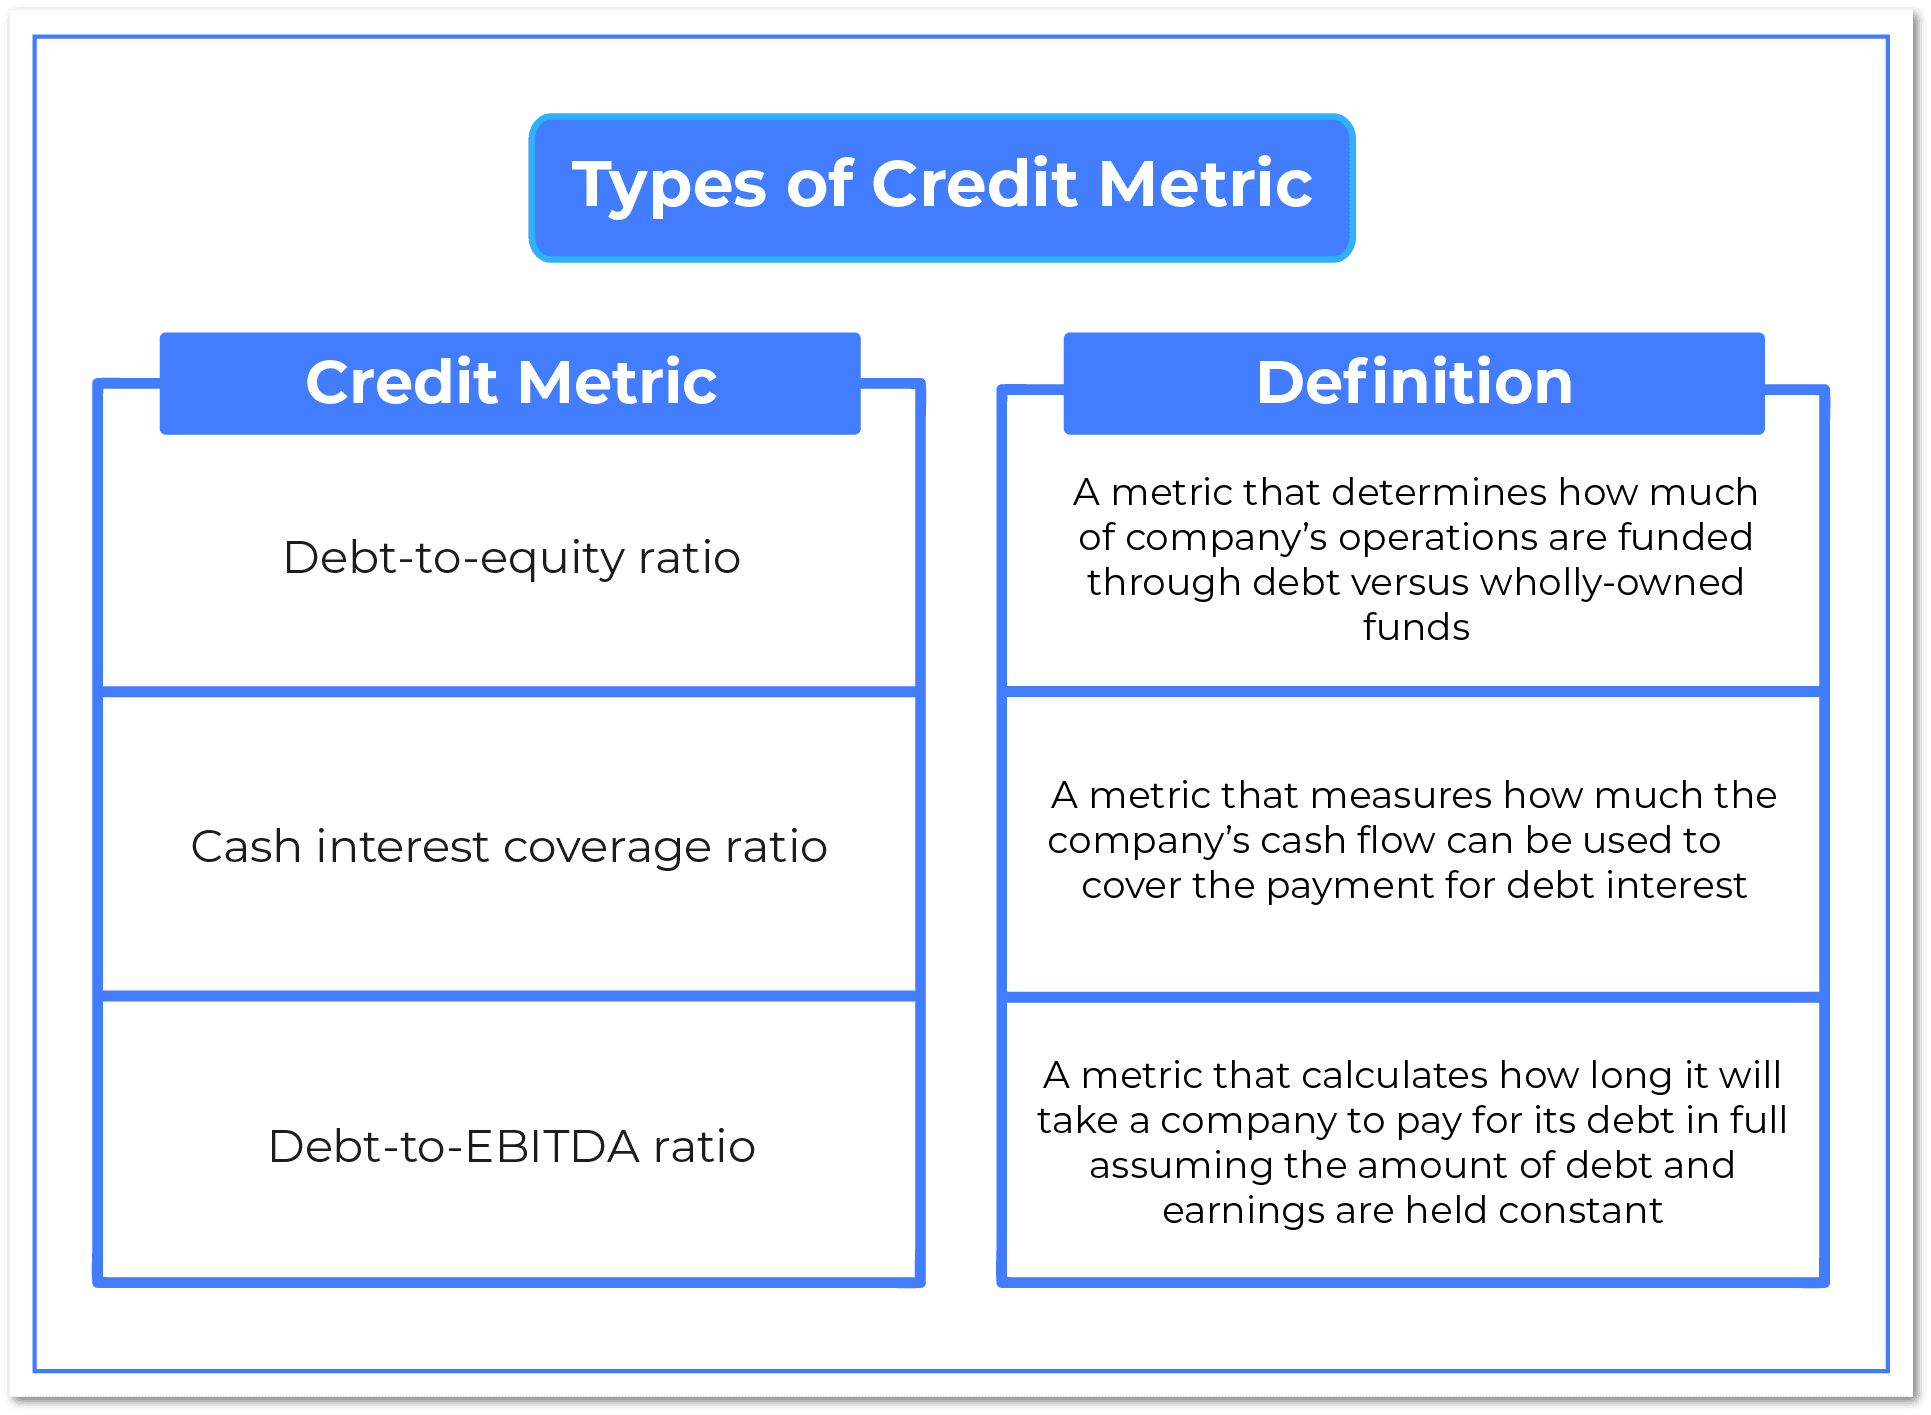 Types of Credit Metric